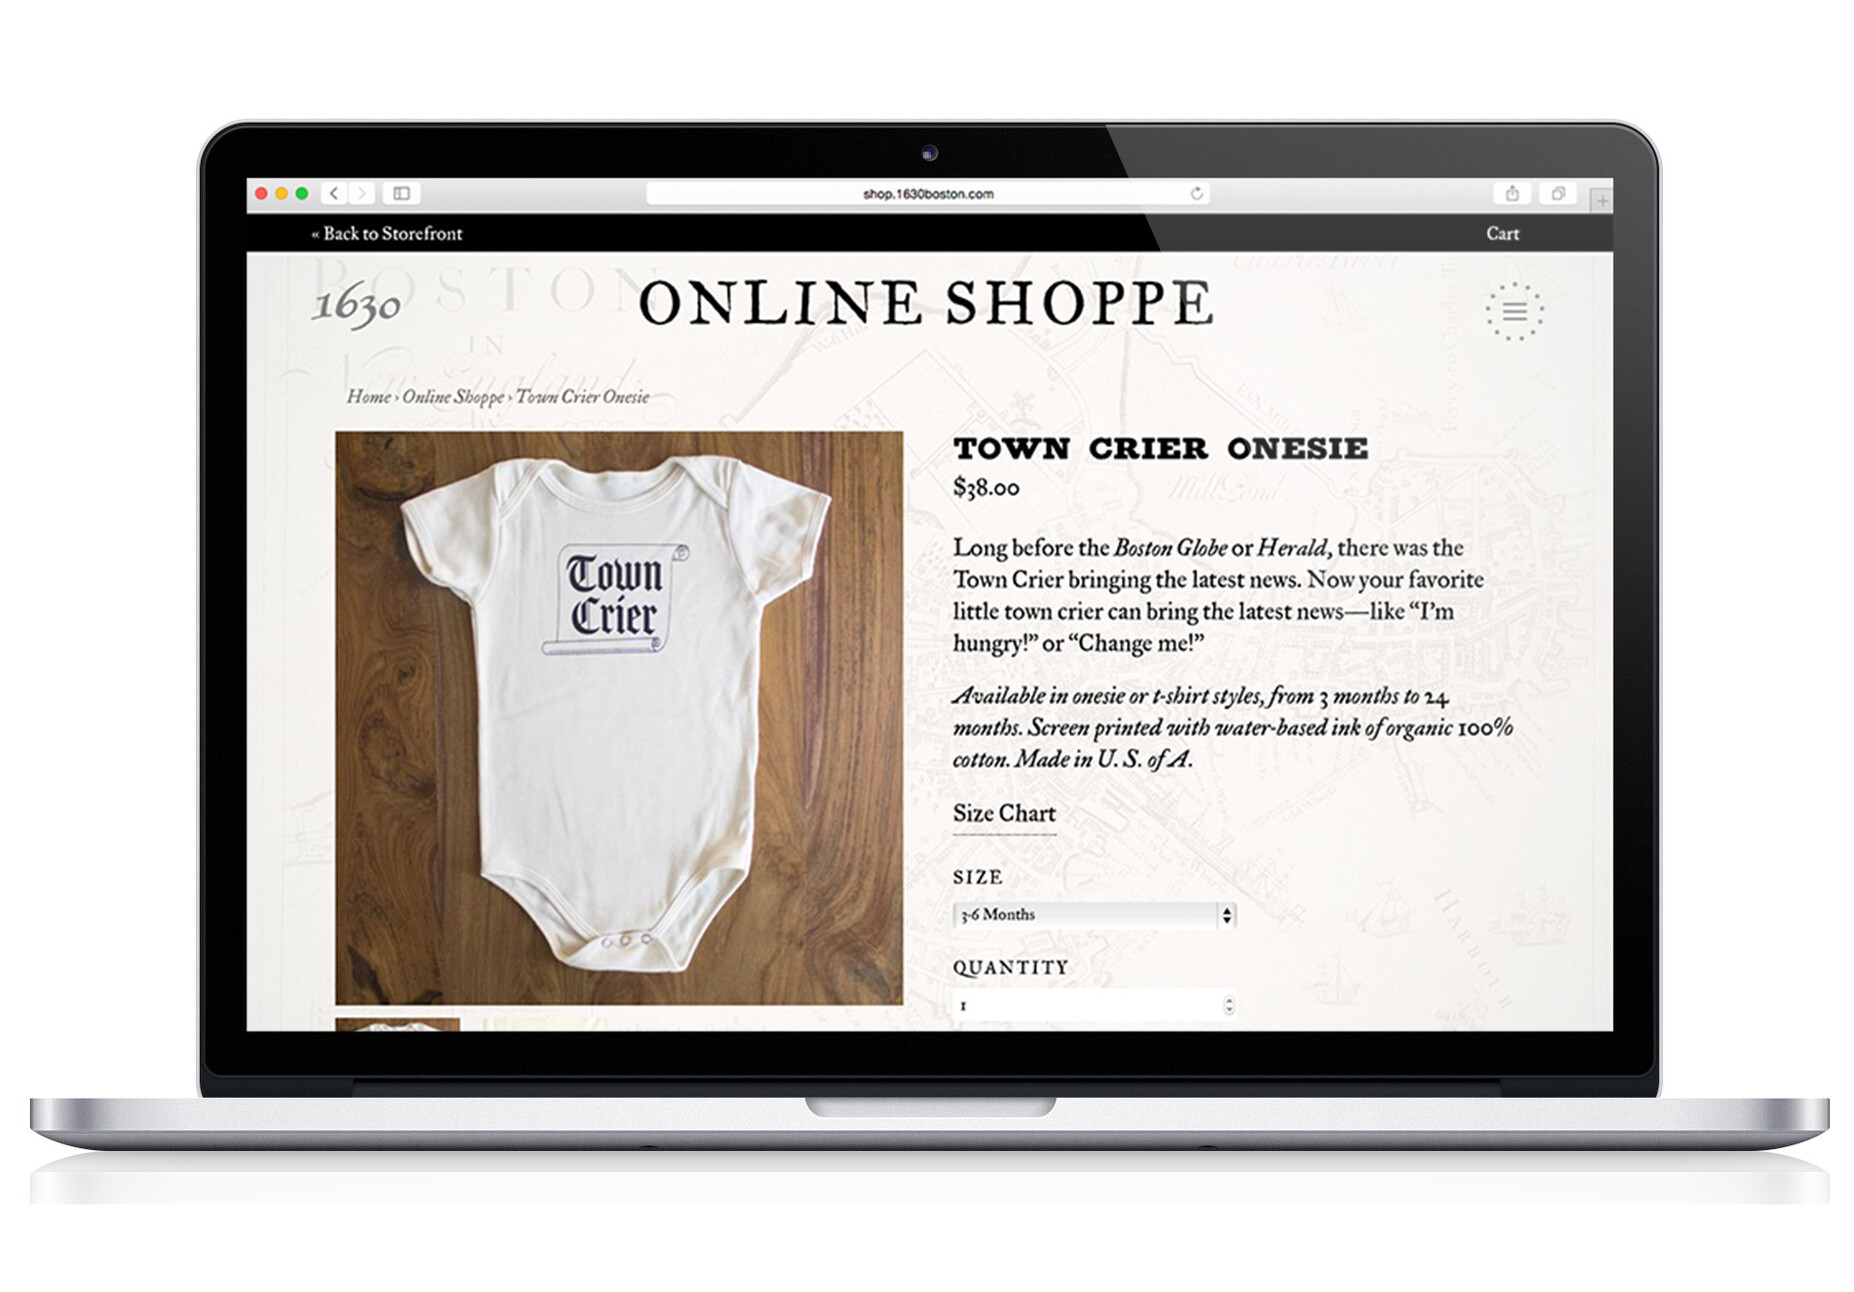 1630 webpage selling a baby’s onesie